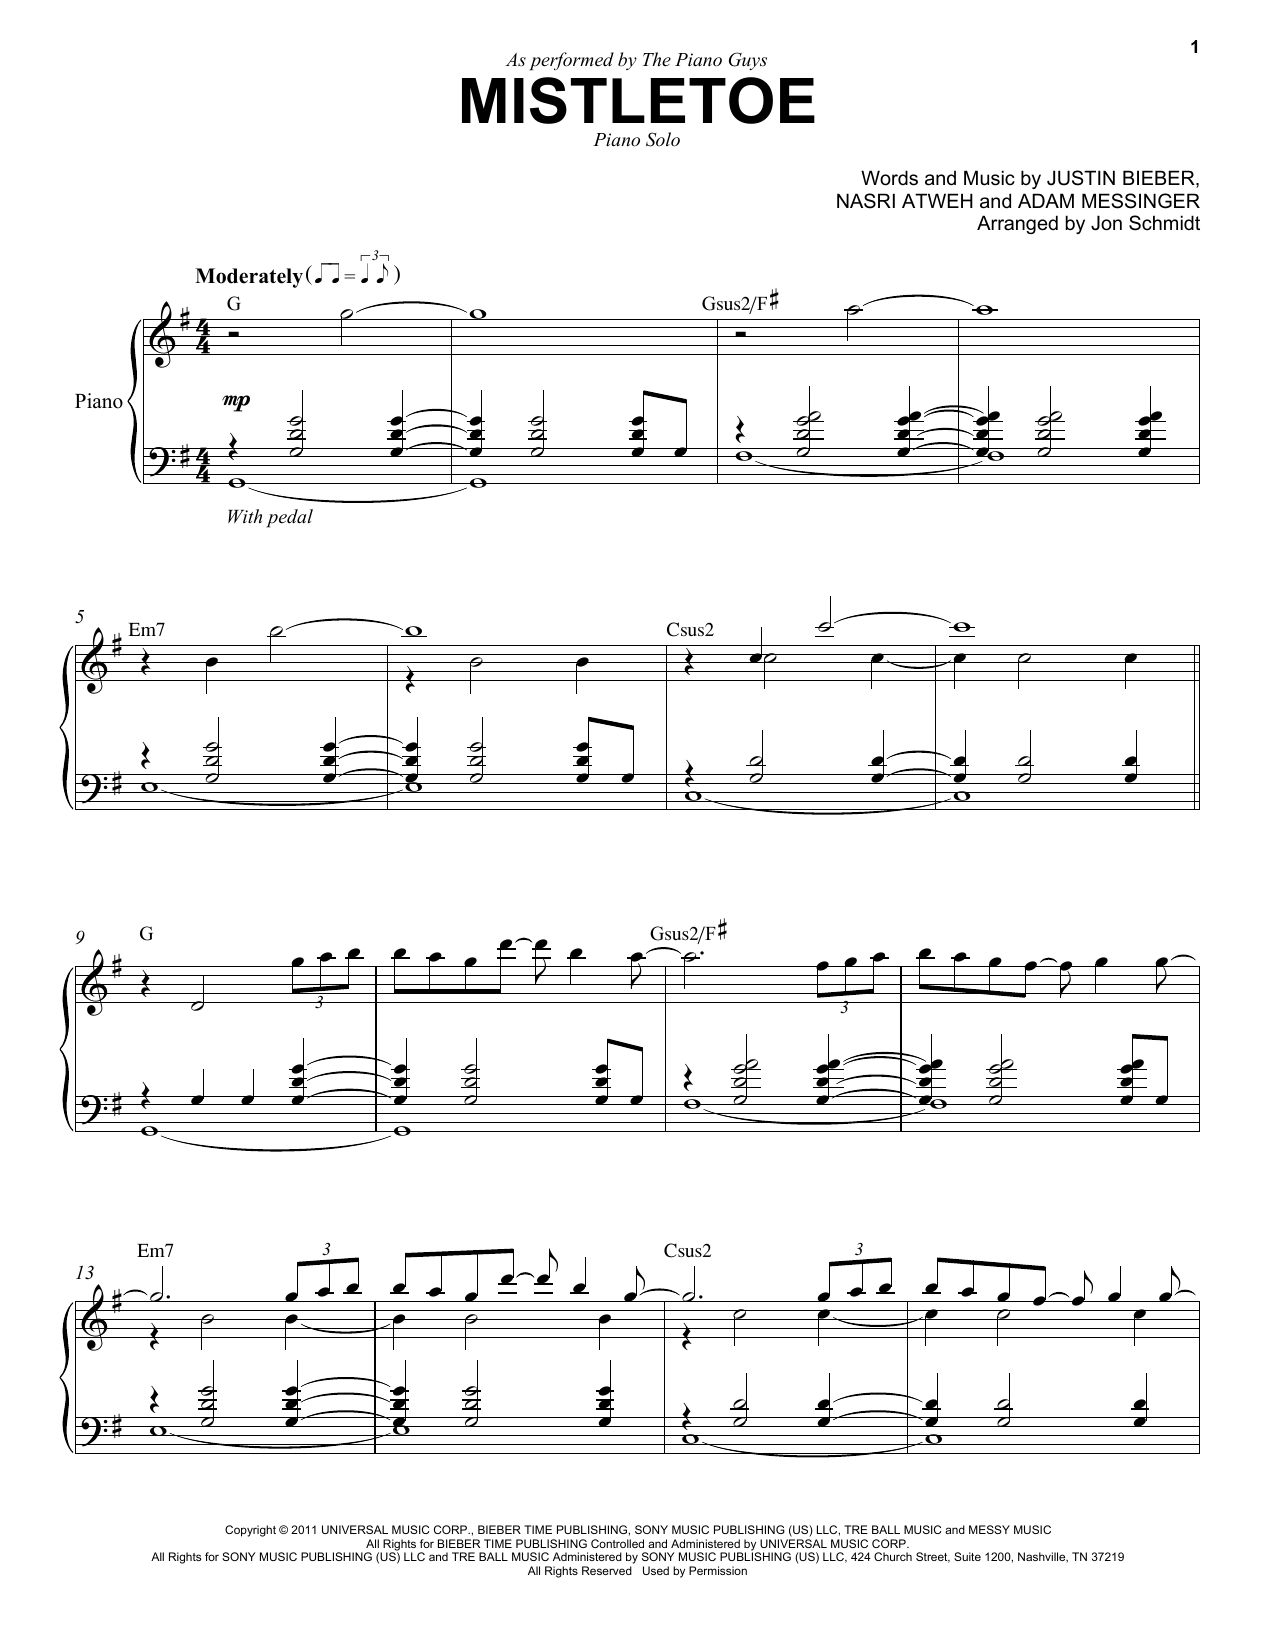 Download The Piano Guys Mistletoe Sheet Music